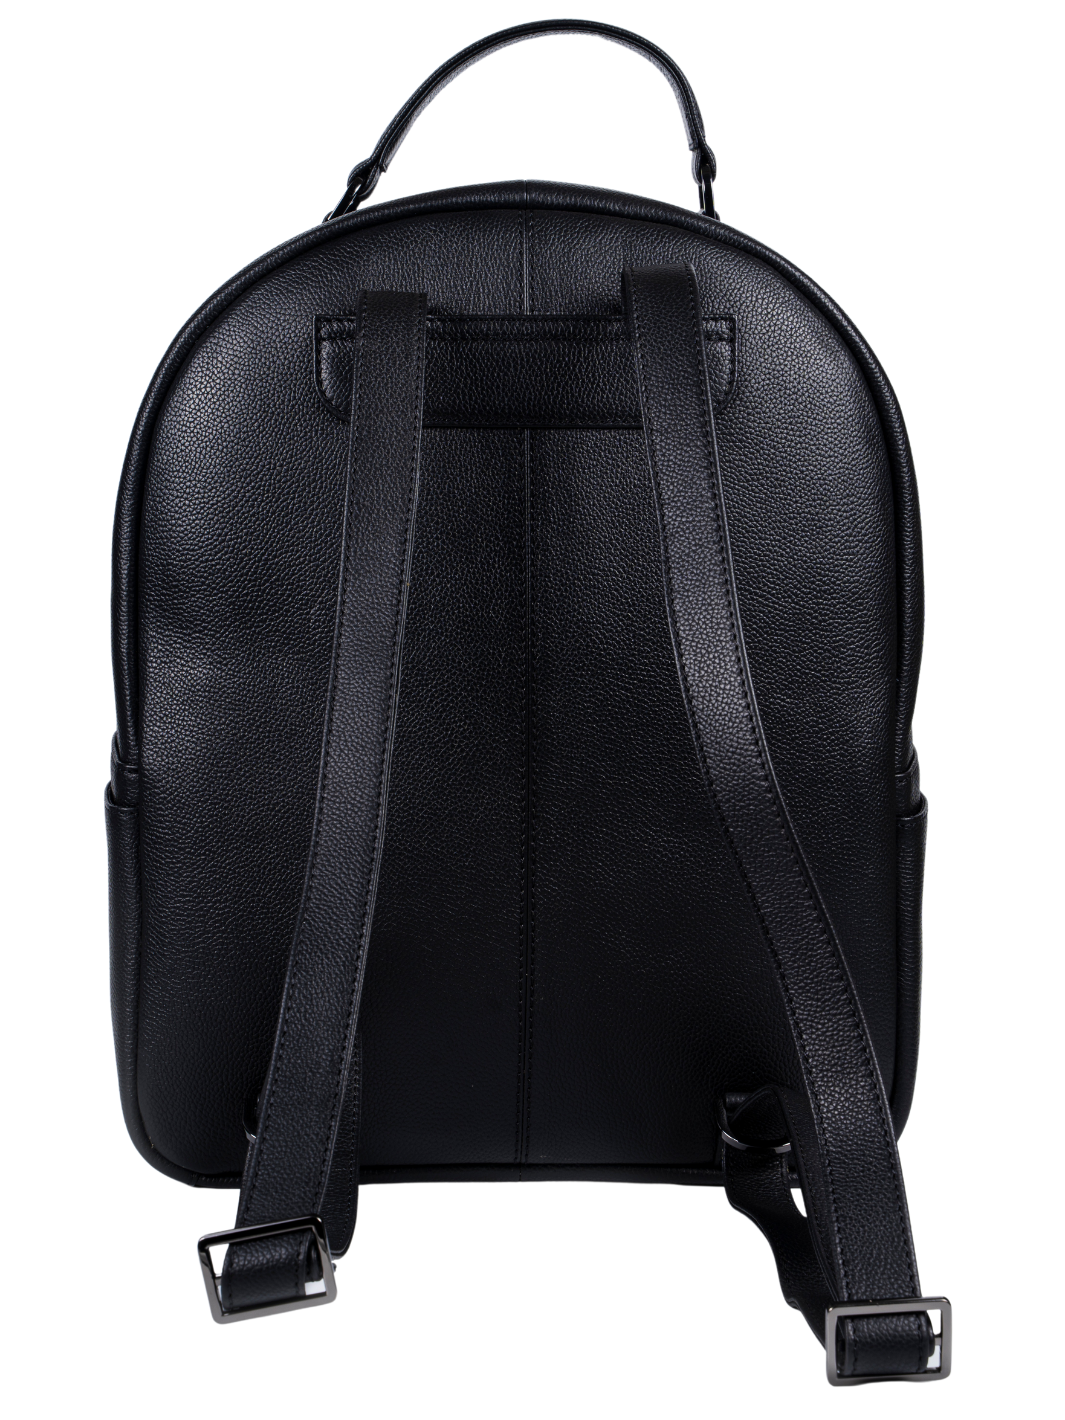 Paro Backpack | Black